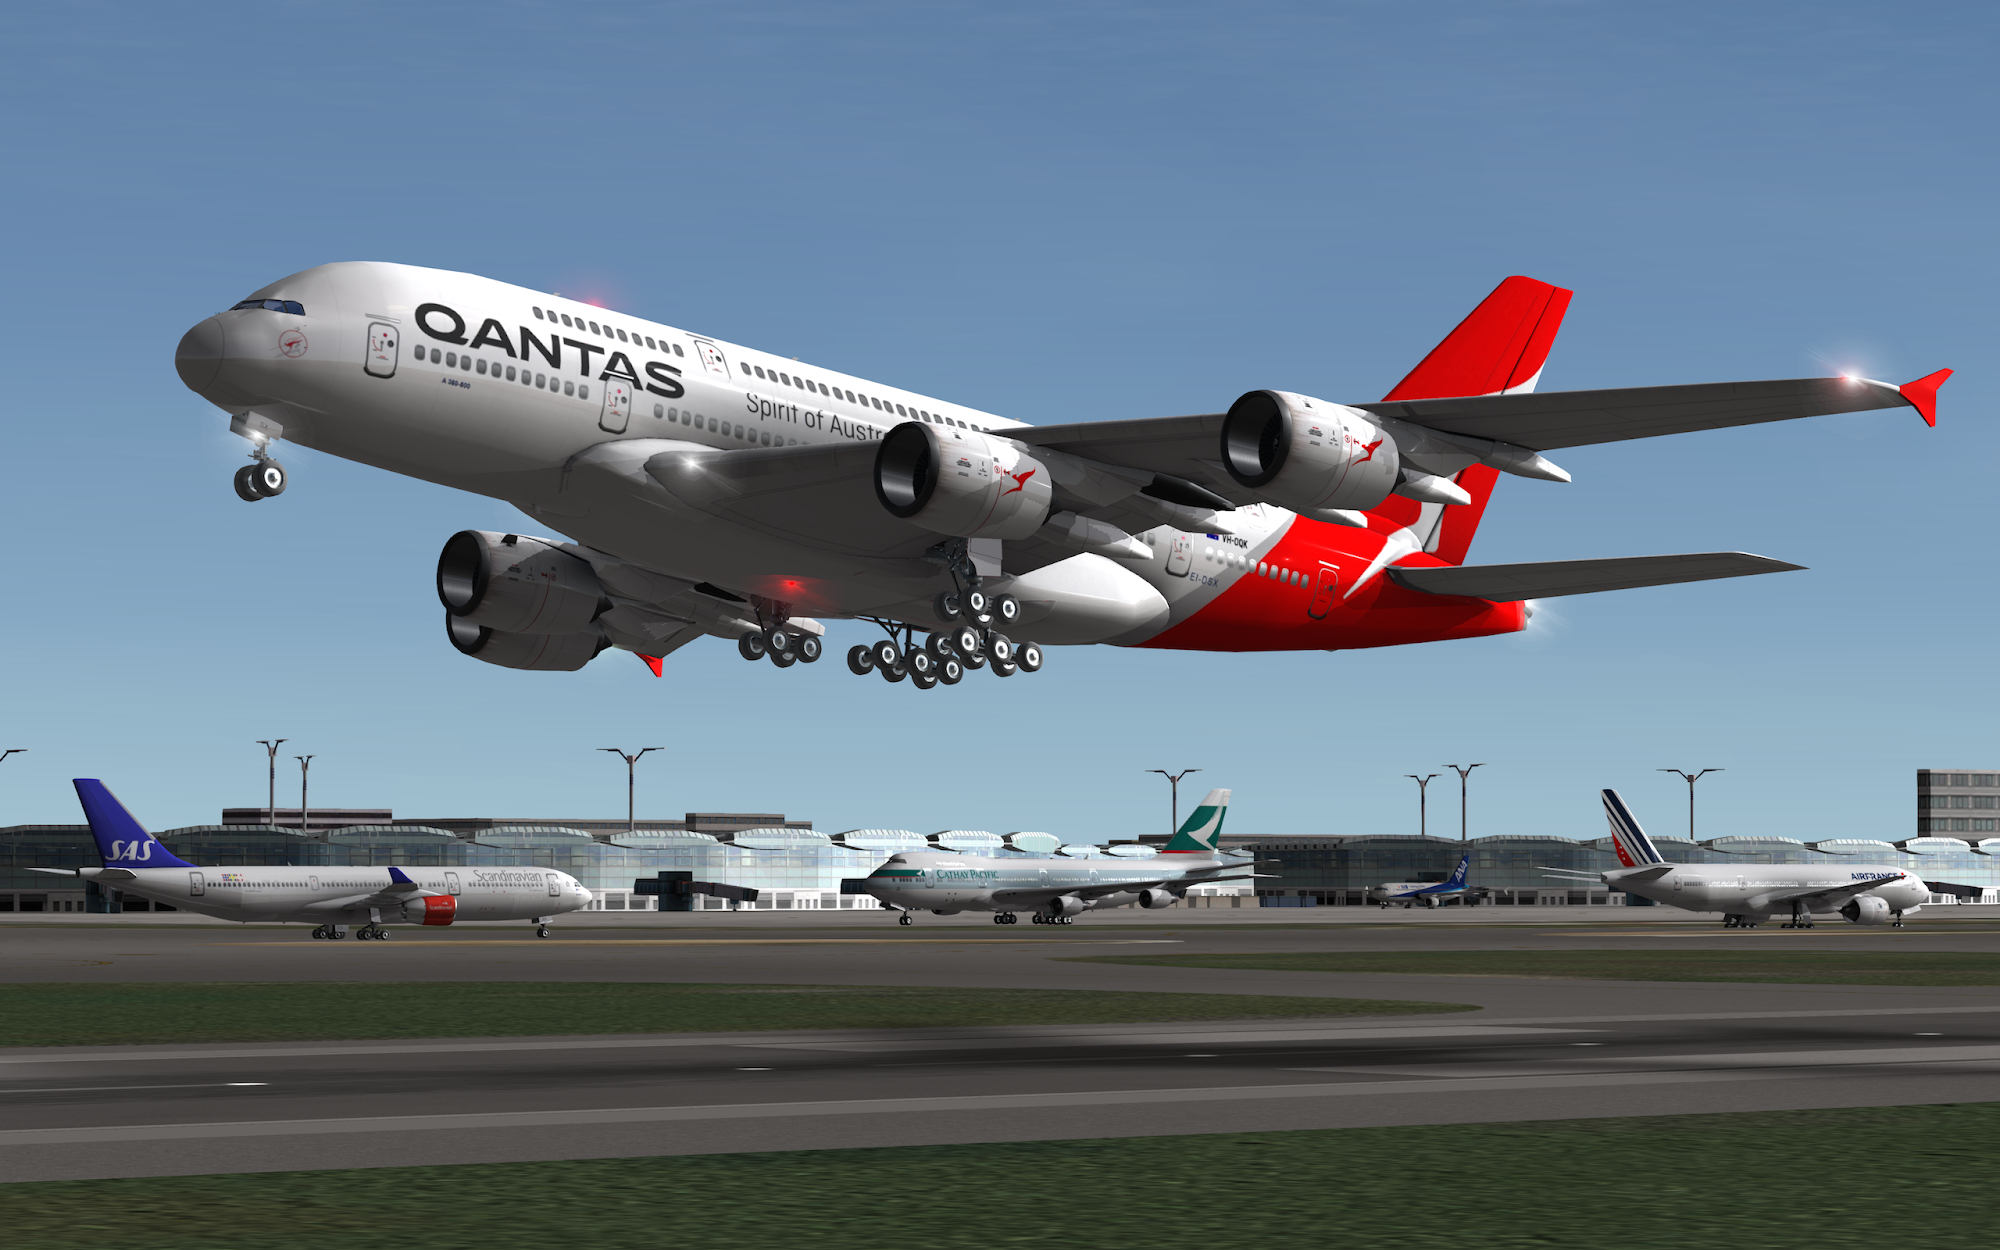 RFS - Real Flight Simulator captura de pantalla 1